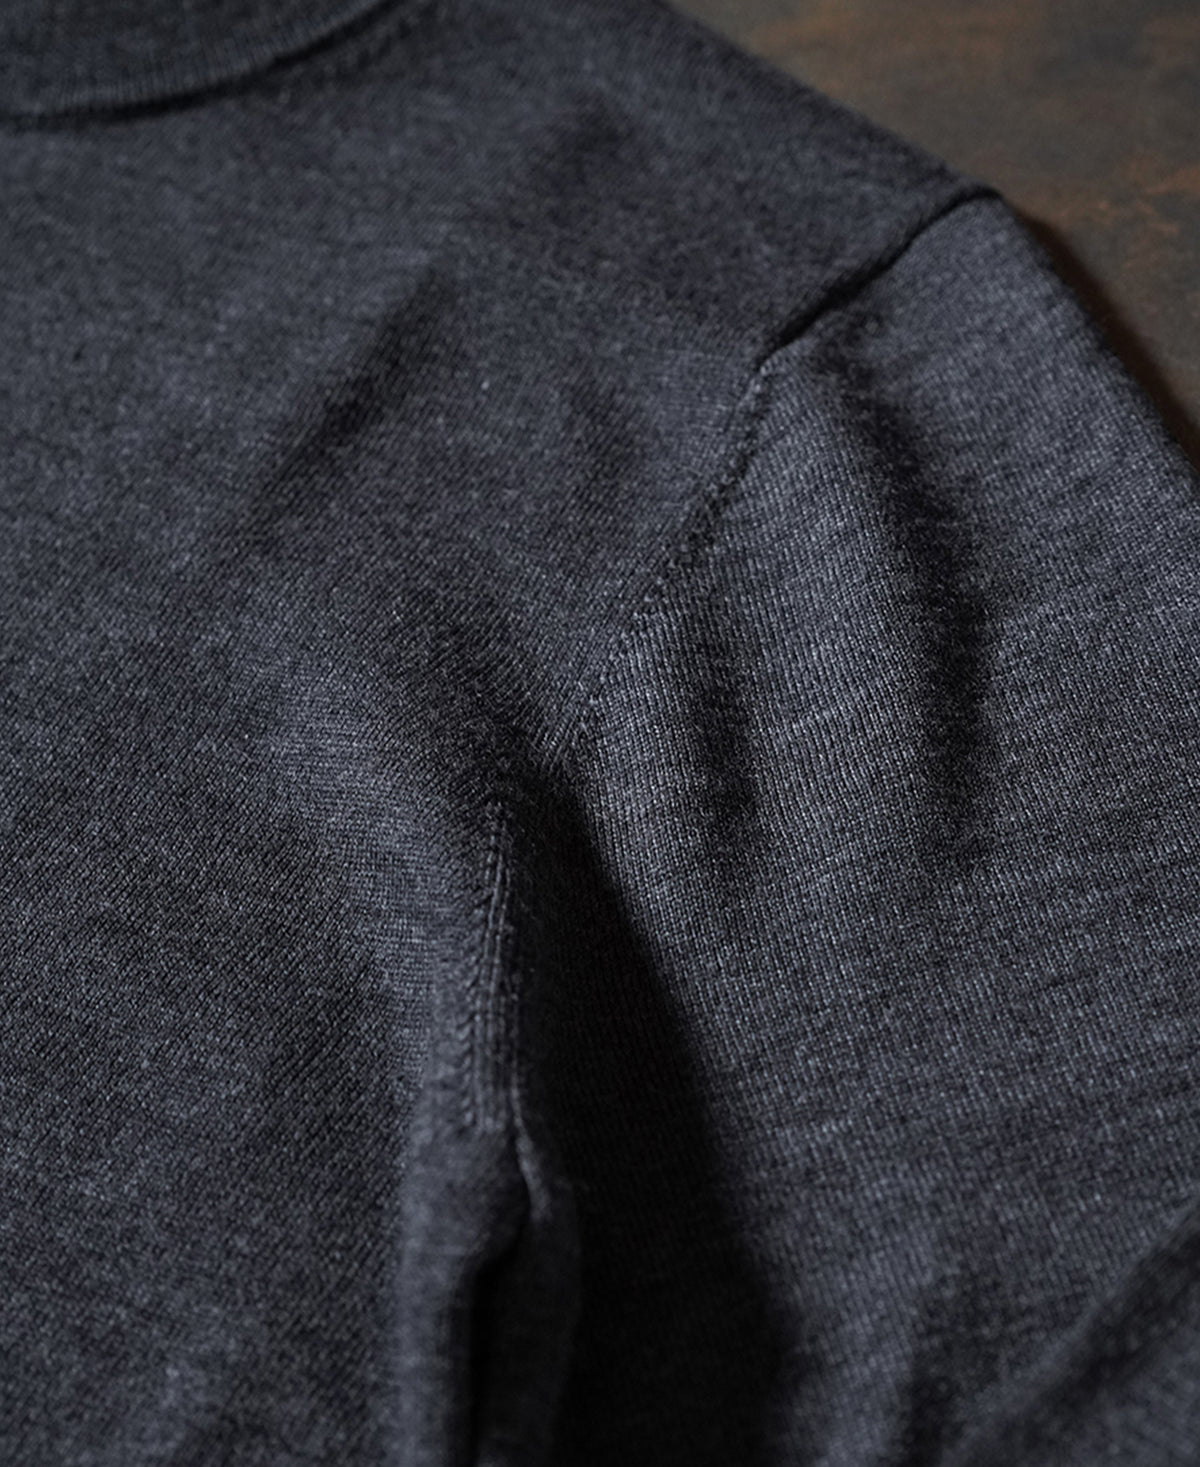 Extrafine Merino Wool Turtleneck Sweater - Dark Gray